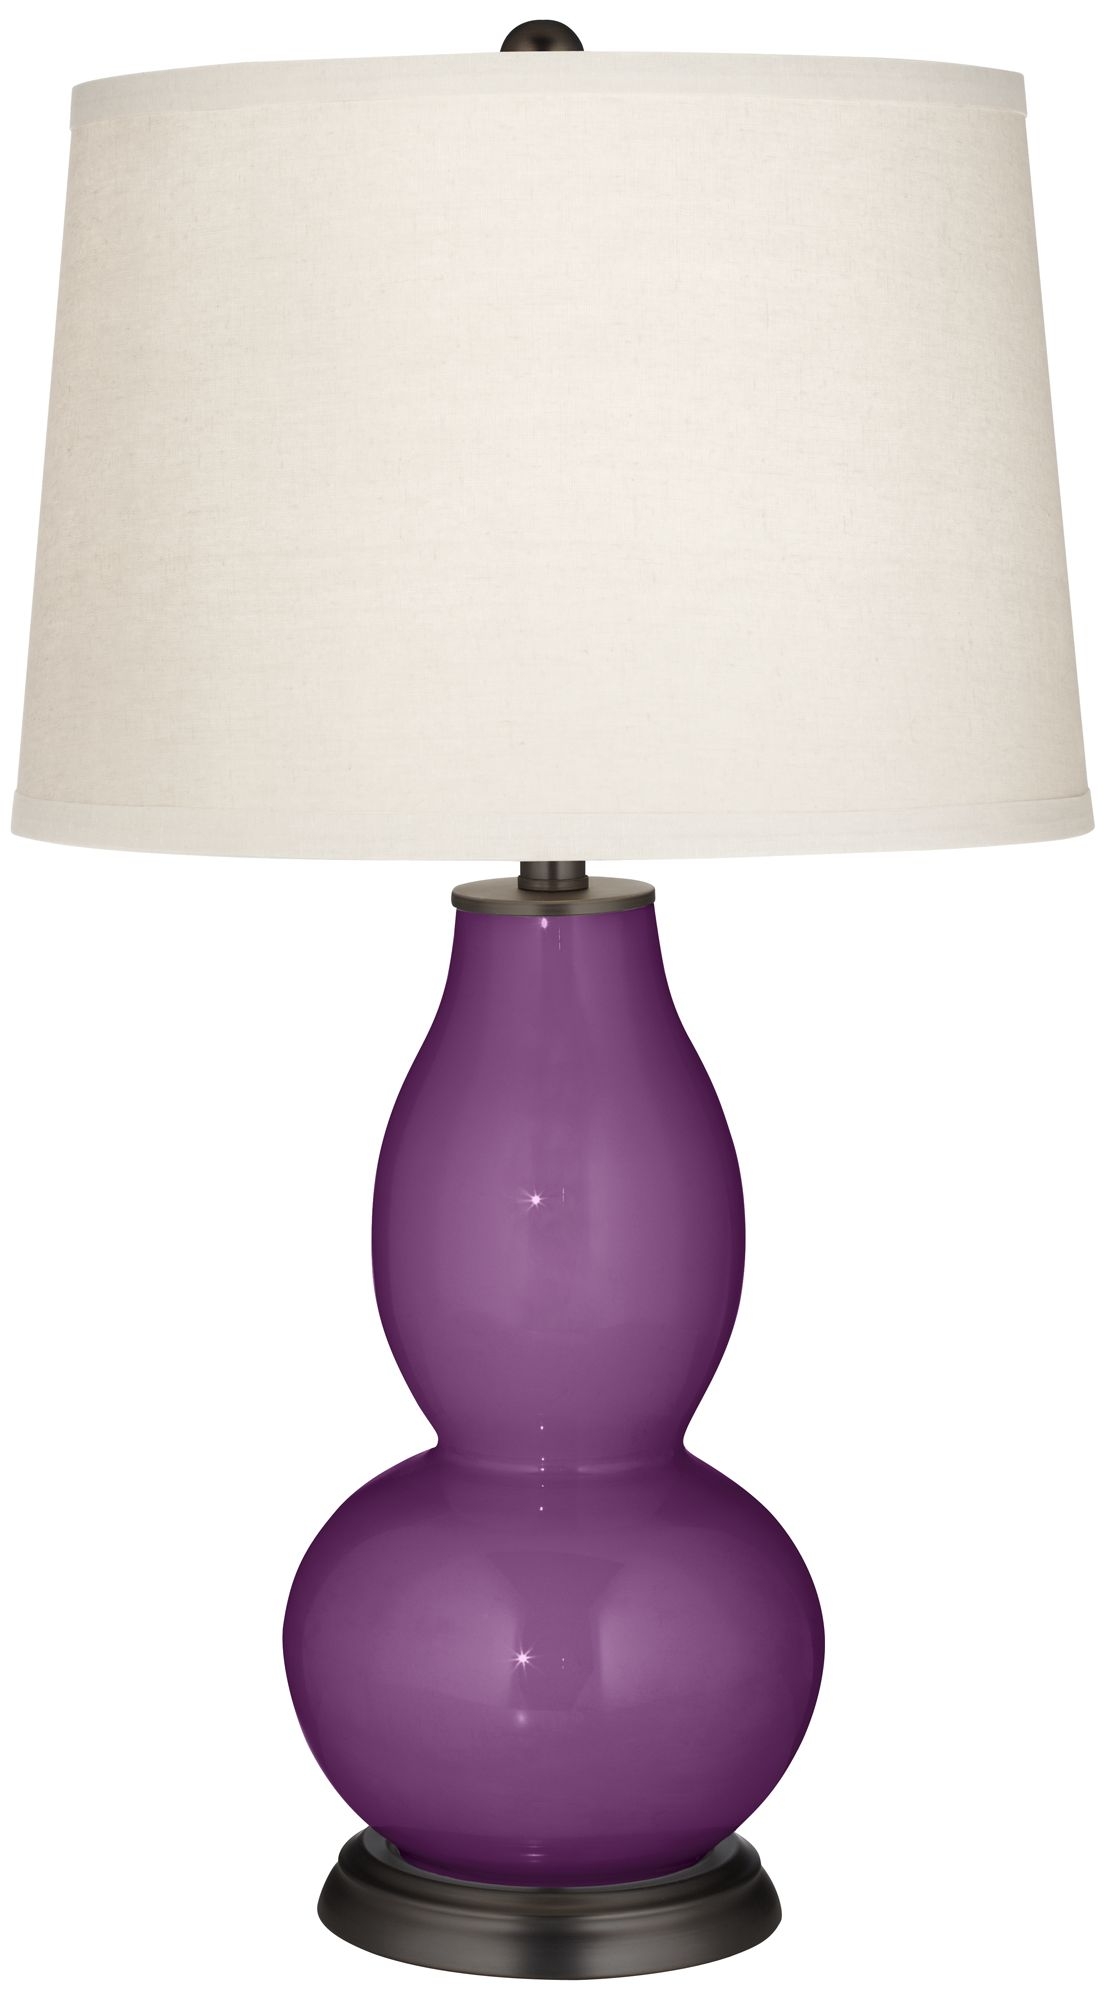 Kimono Violet Double Gourd Table Lamp - Image 0